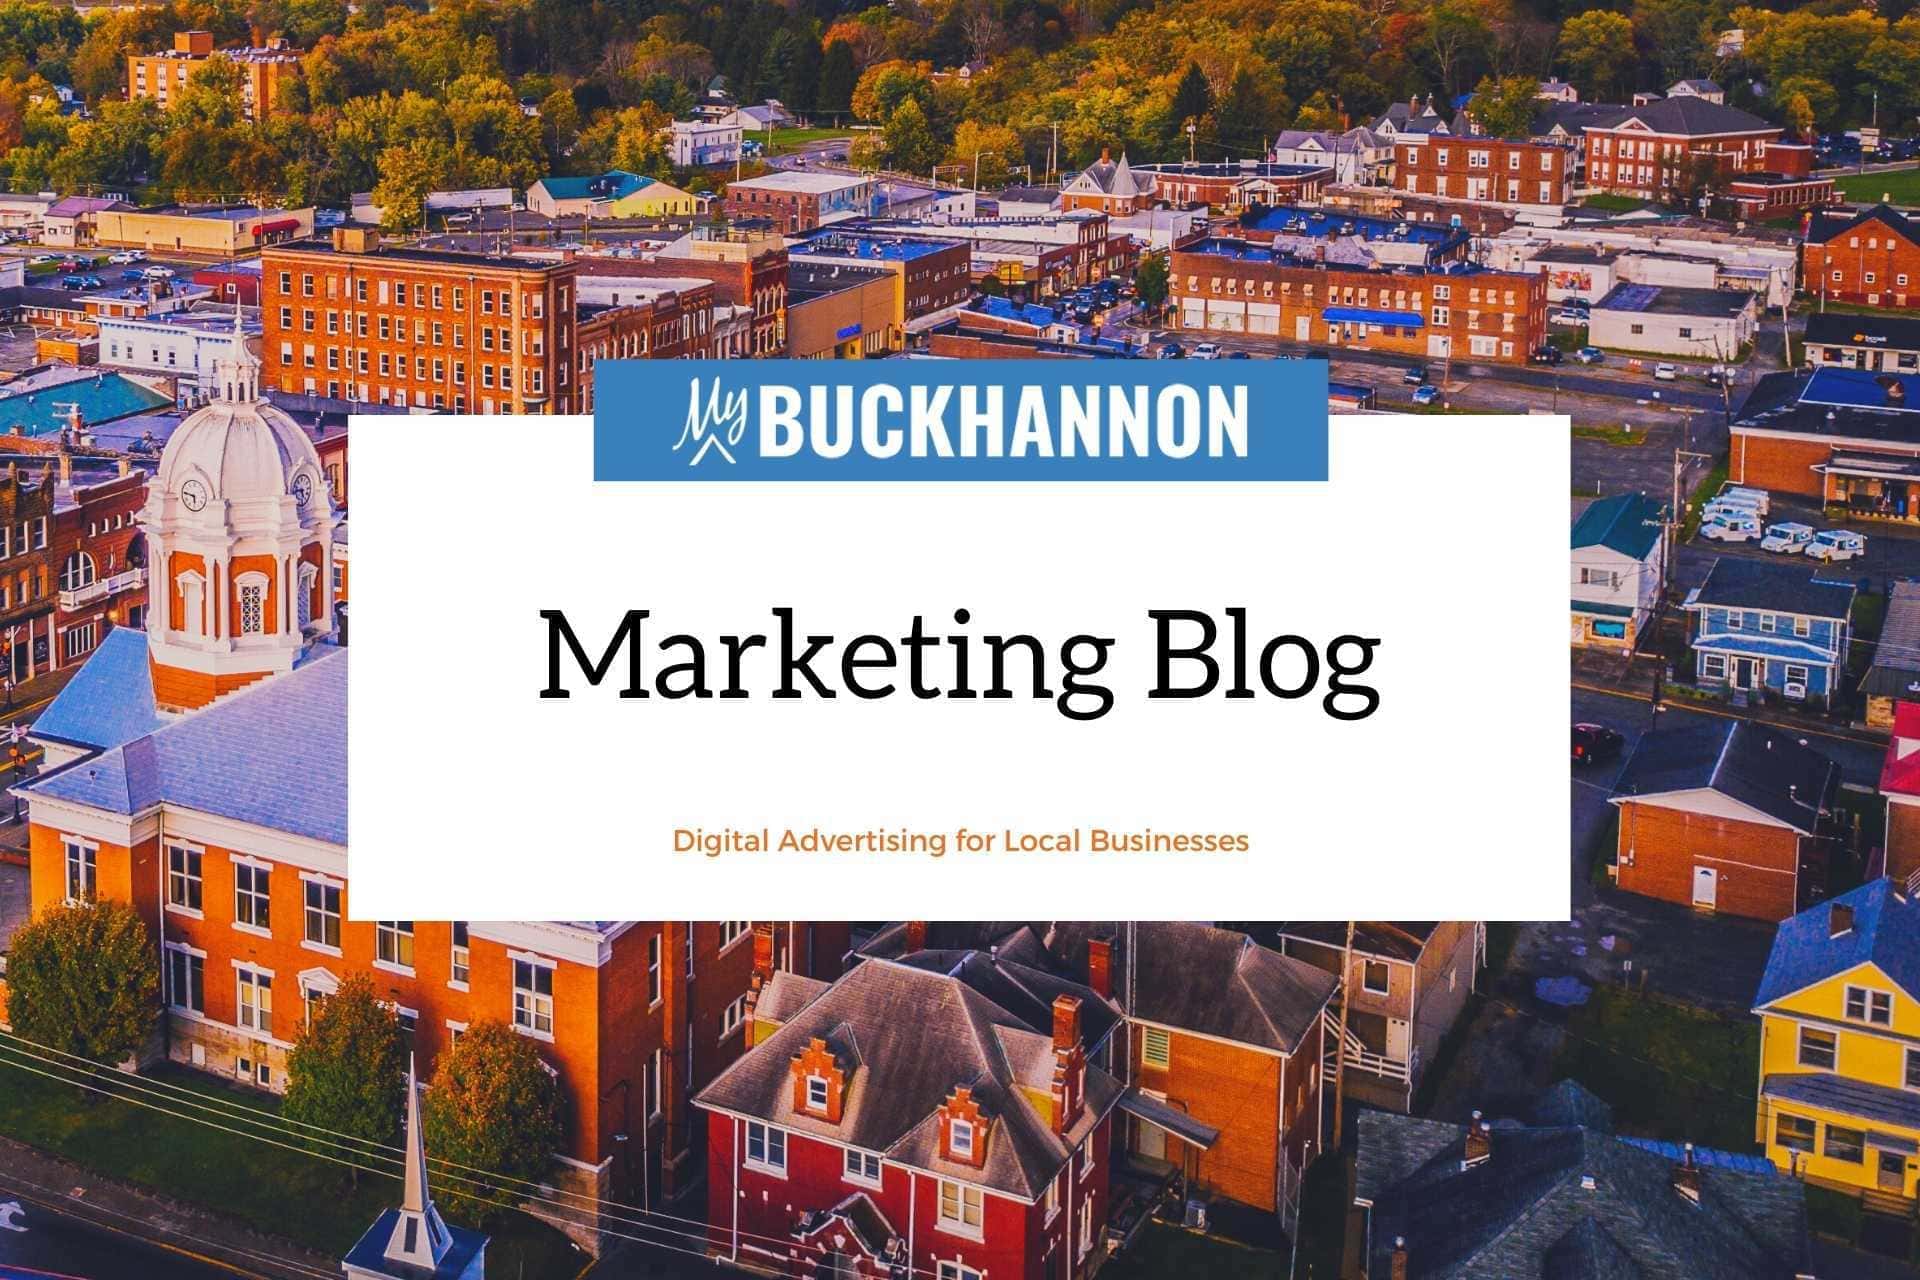 My Buckhannon Marketing Blog